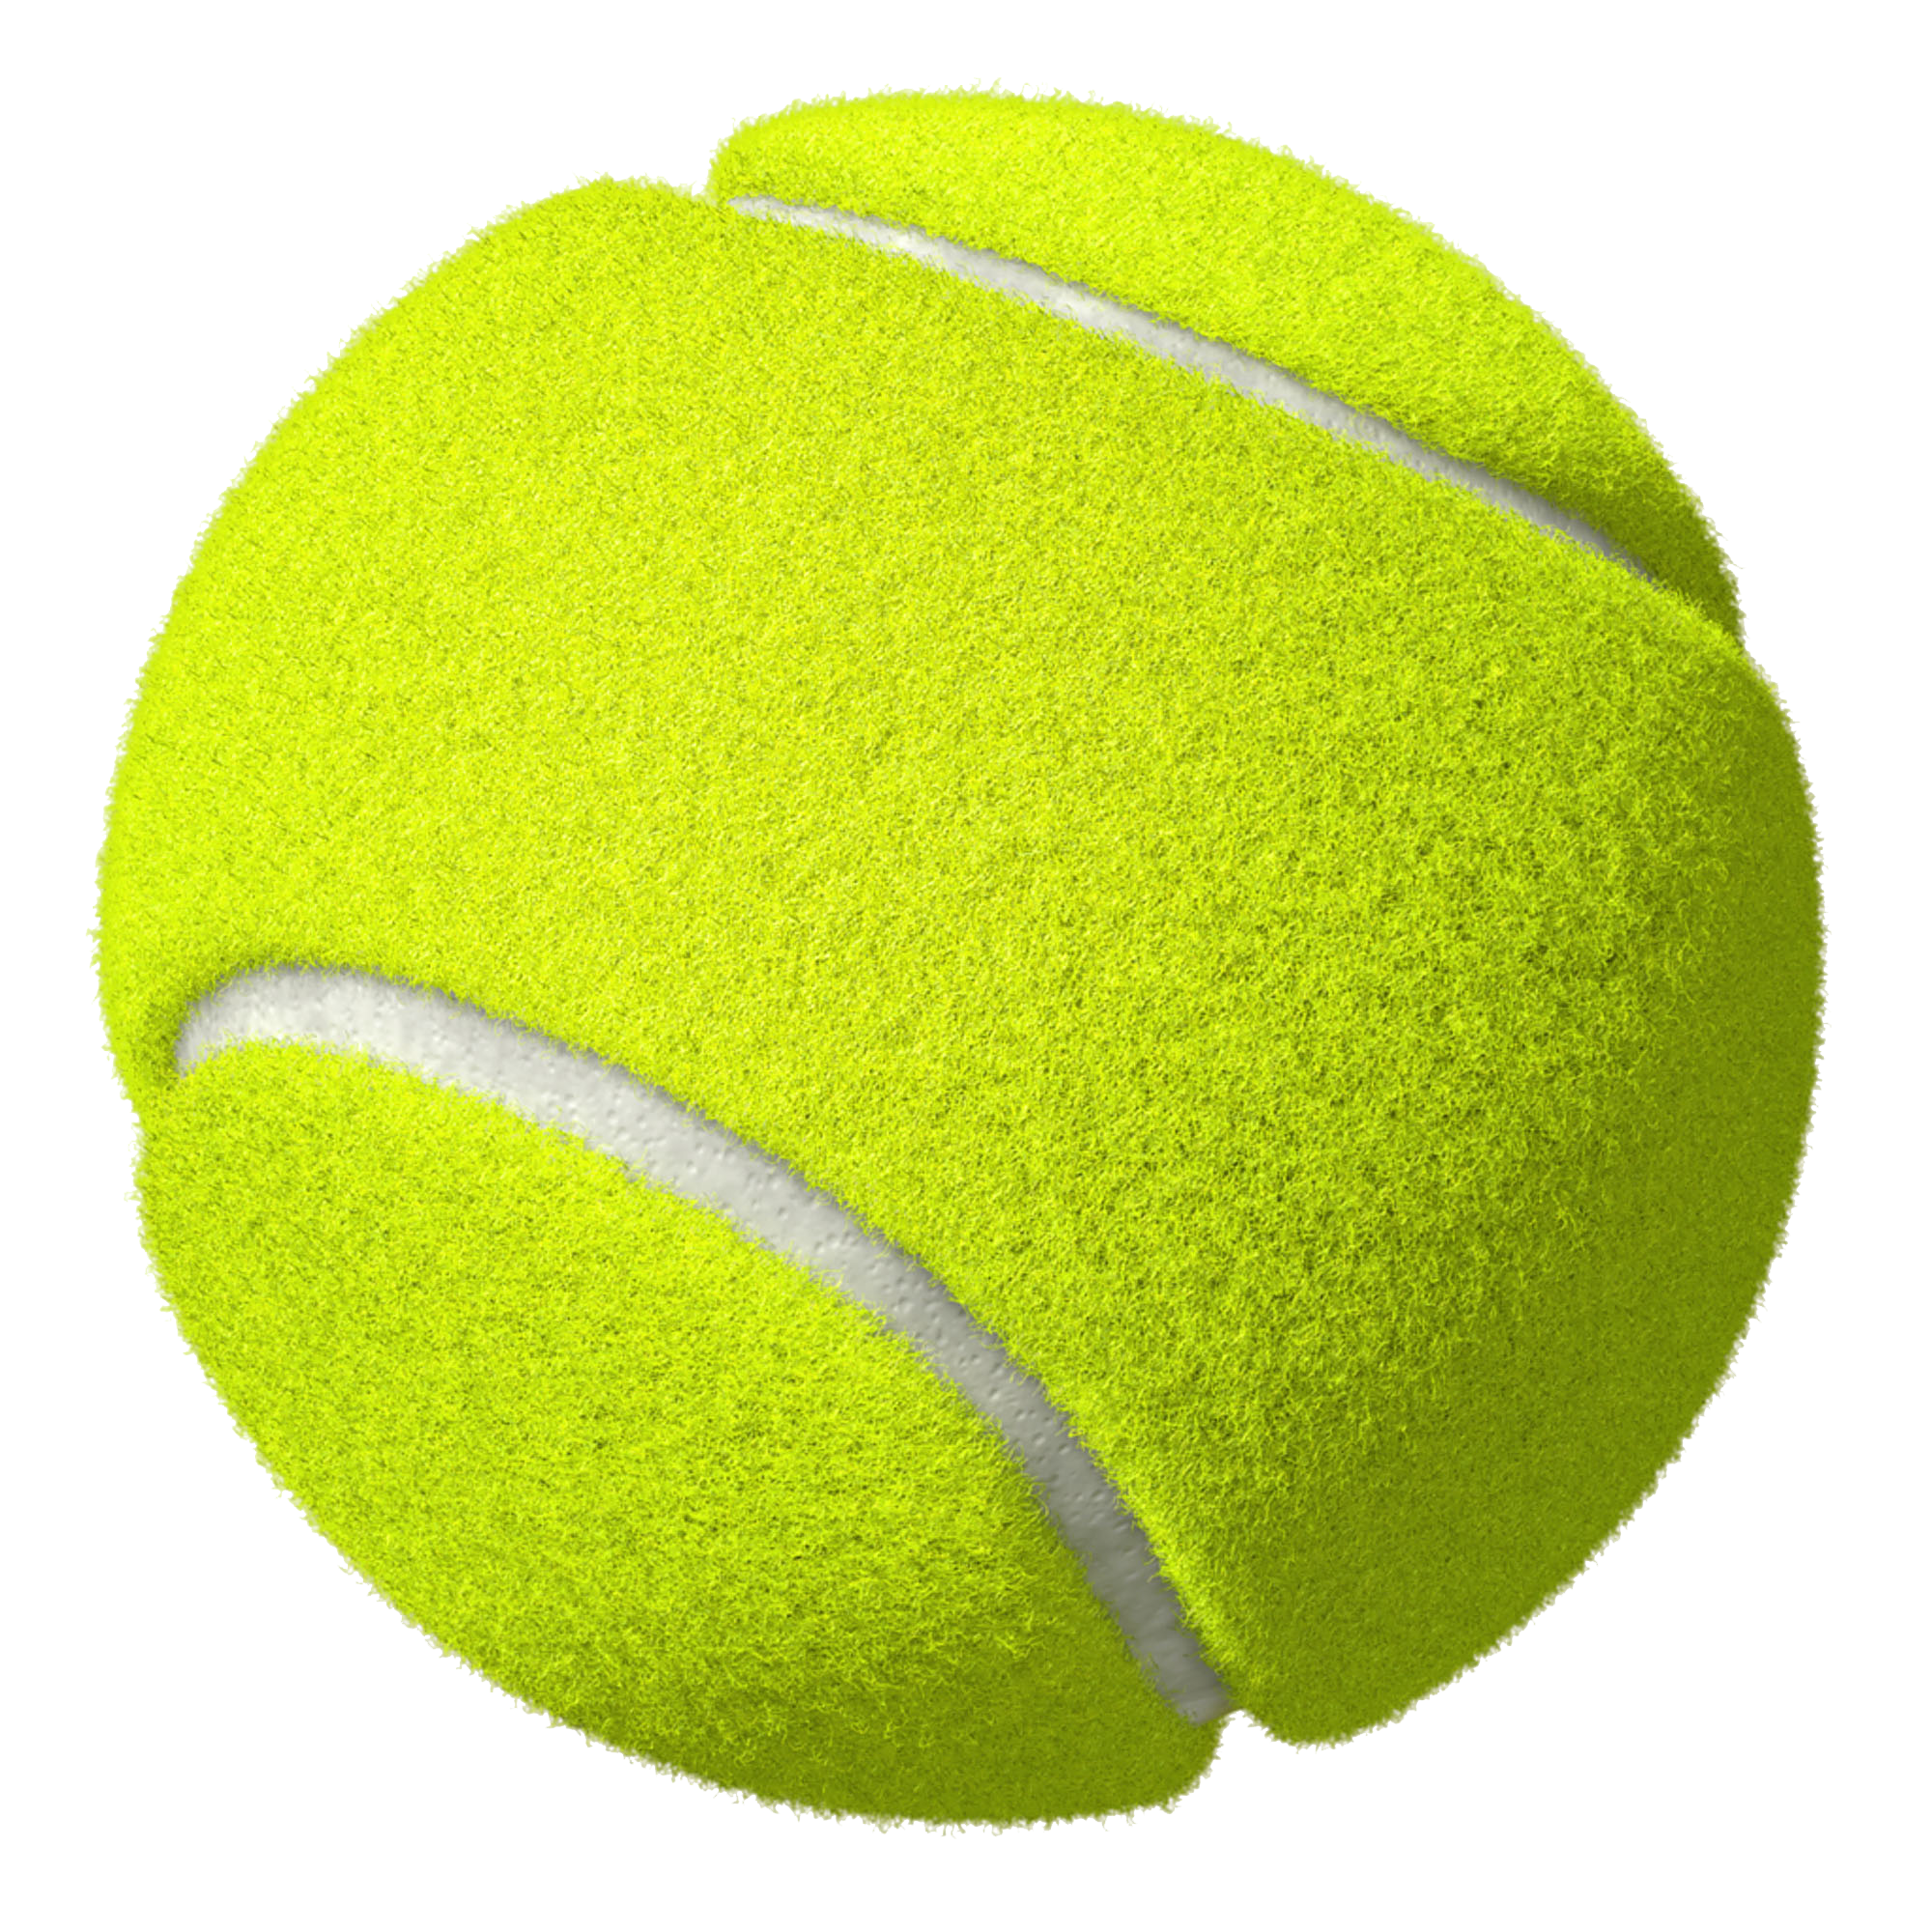 Tennis Ball Transparent Free PNG